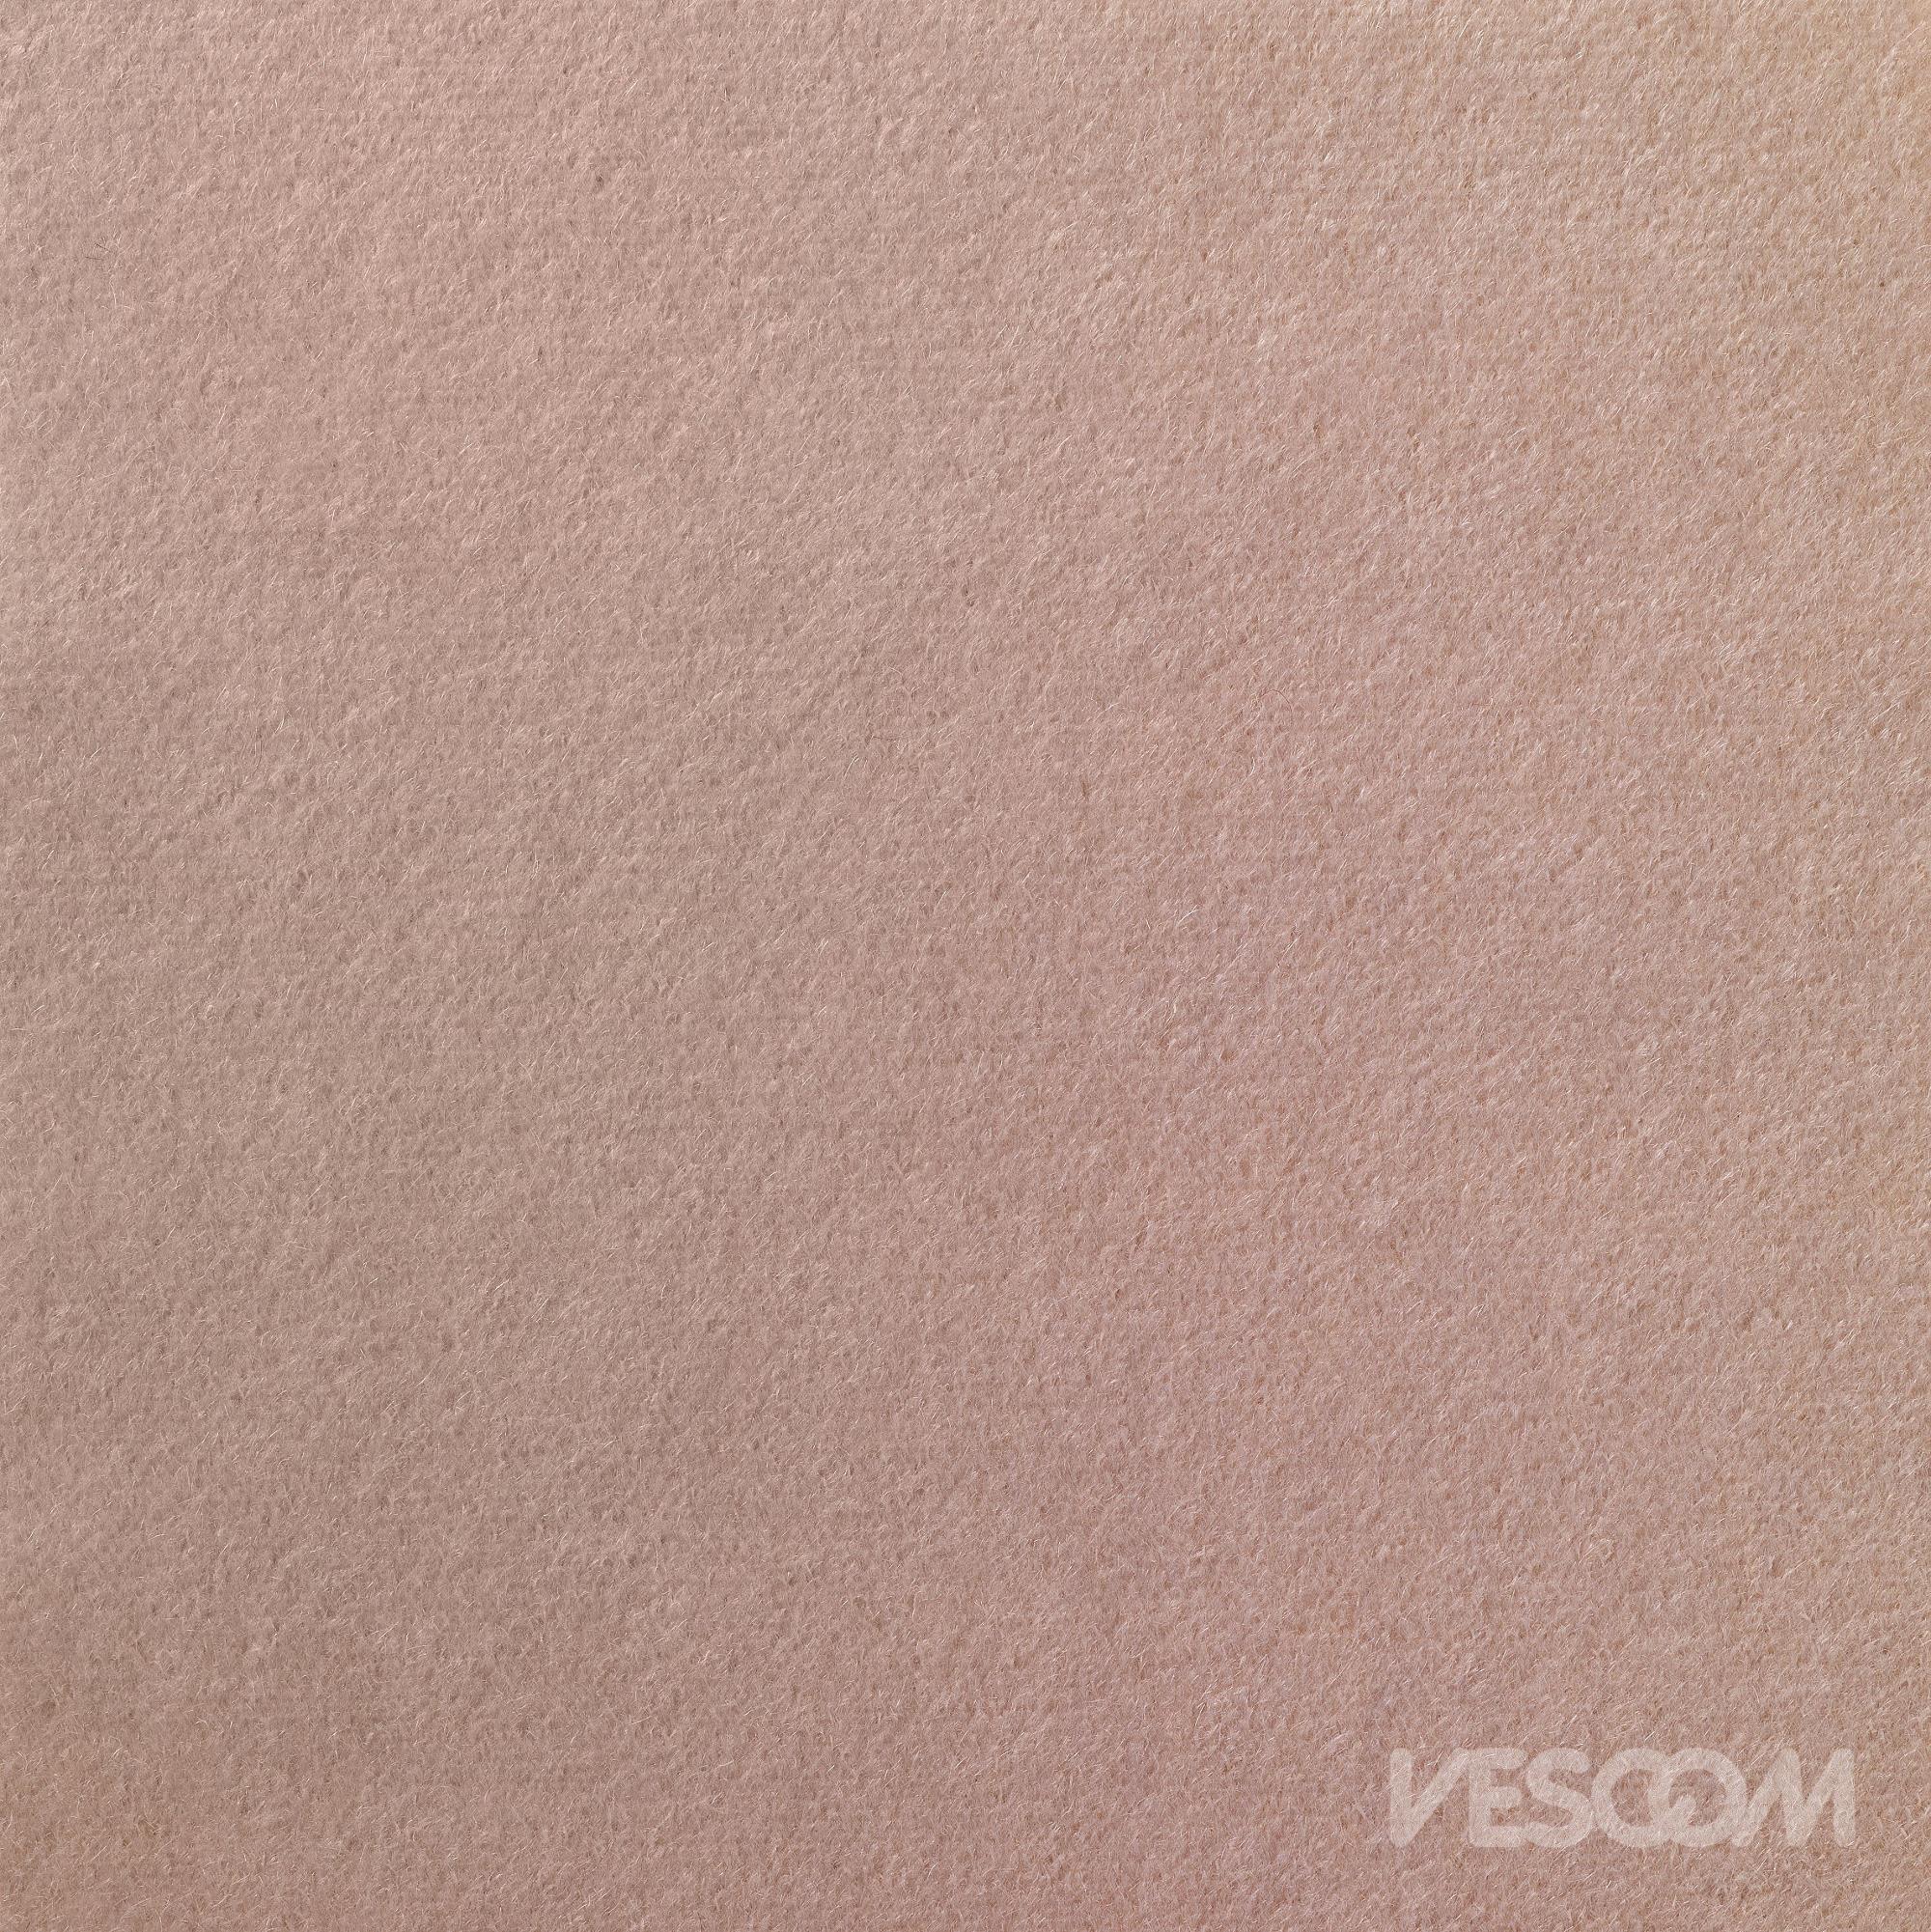 Vescom Ariana Upholstery Fabric 7061.34 